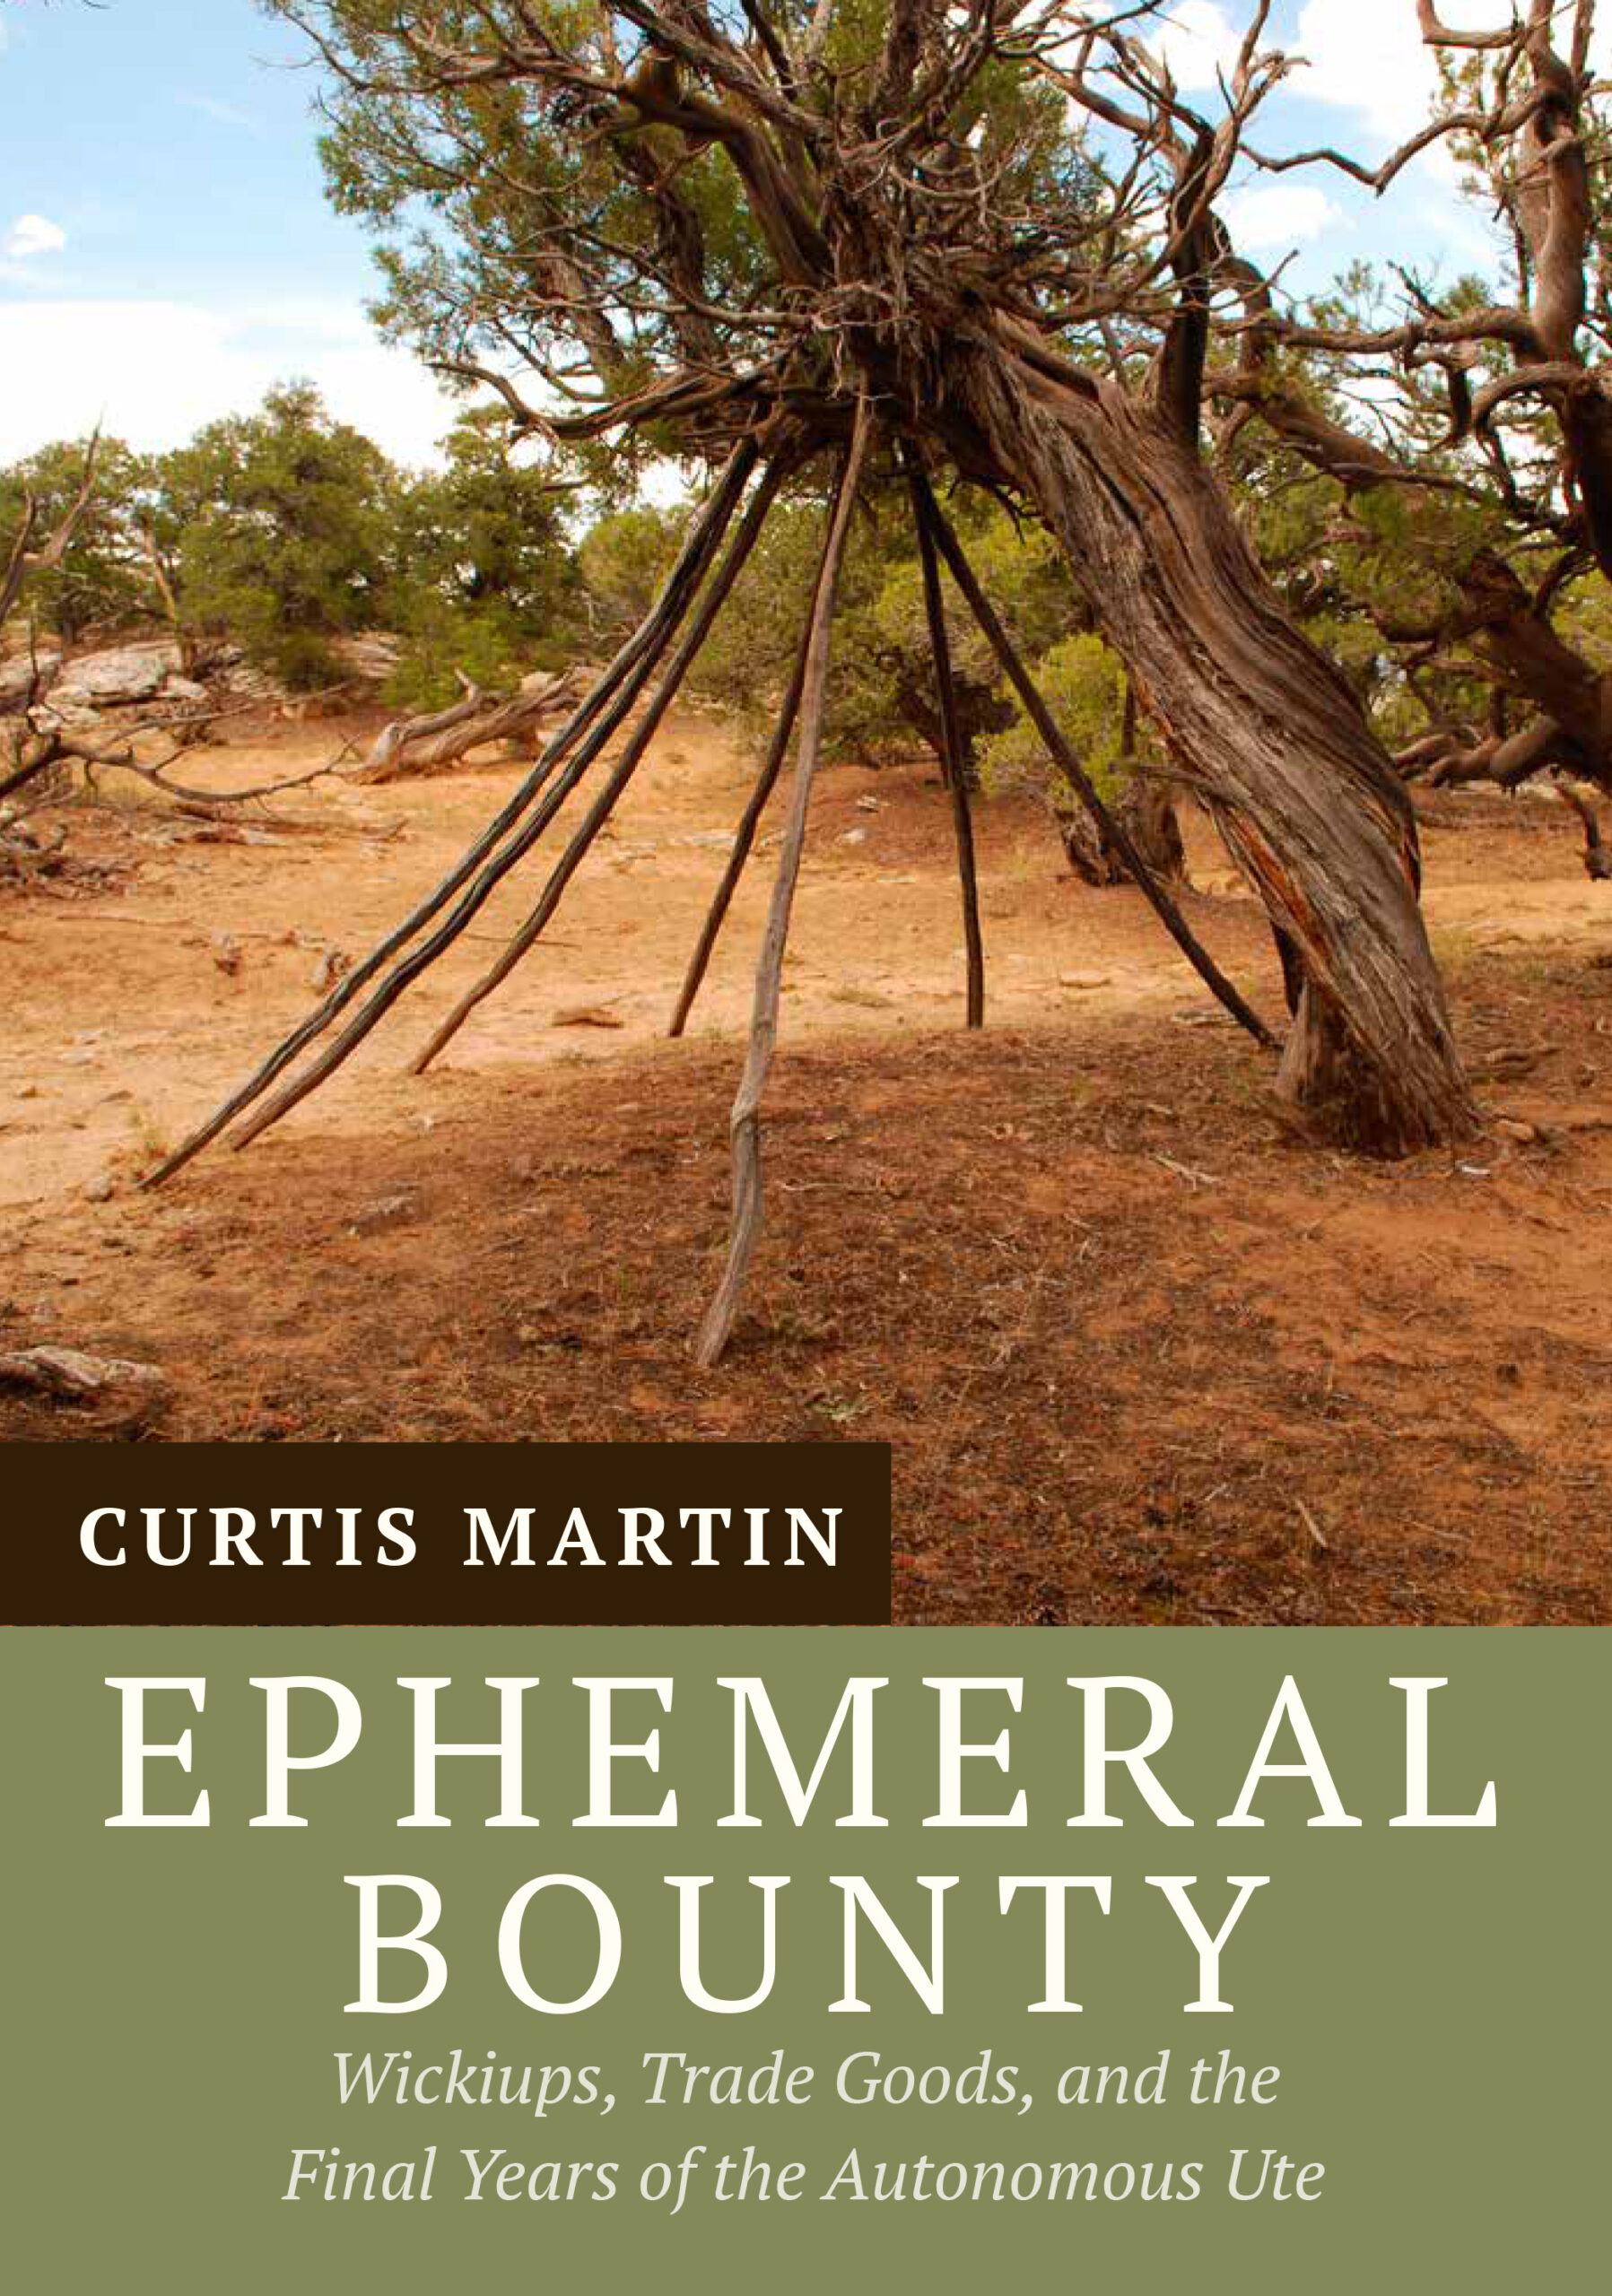 Ephemeral Bounty by Curtis Martin